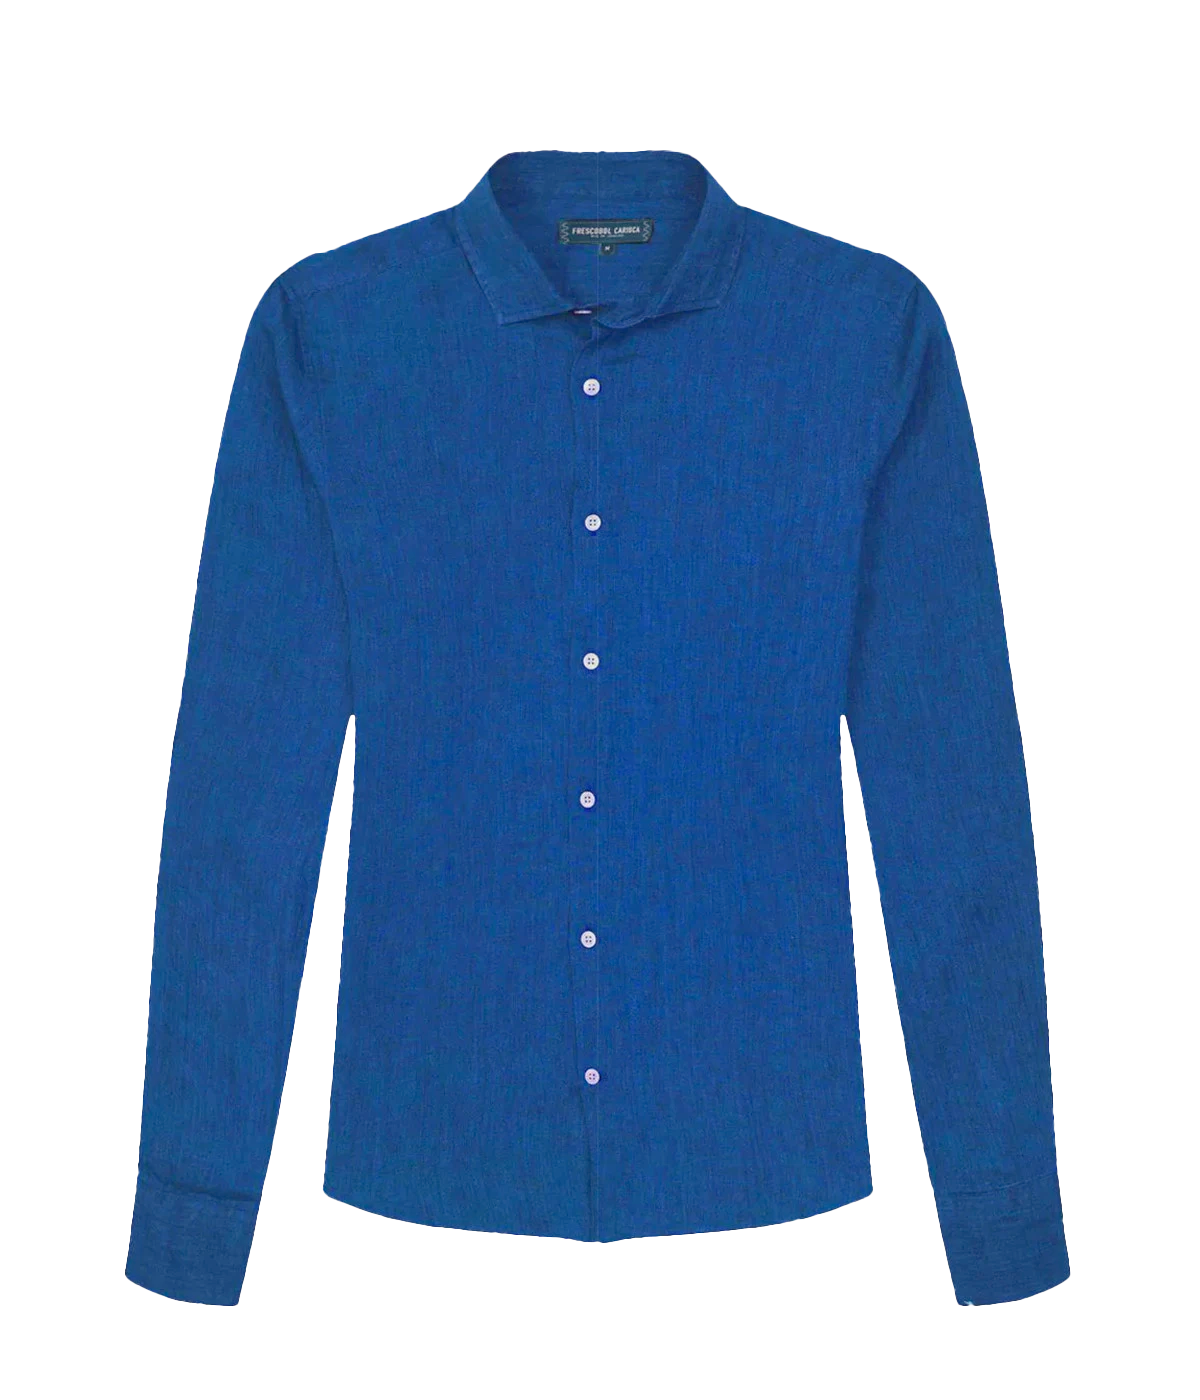 Antonio Linen Long Sleeve Shirt in Navy Blue